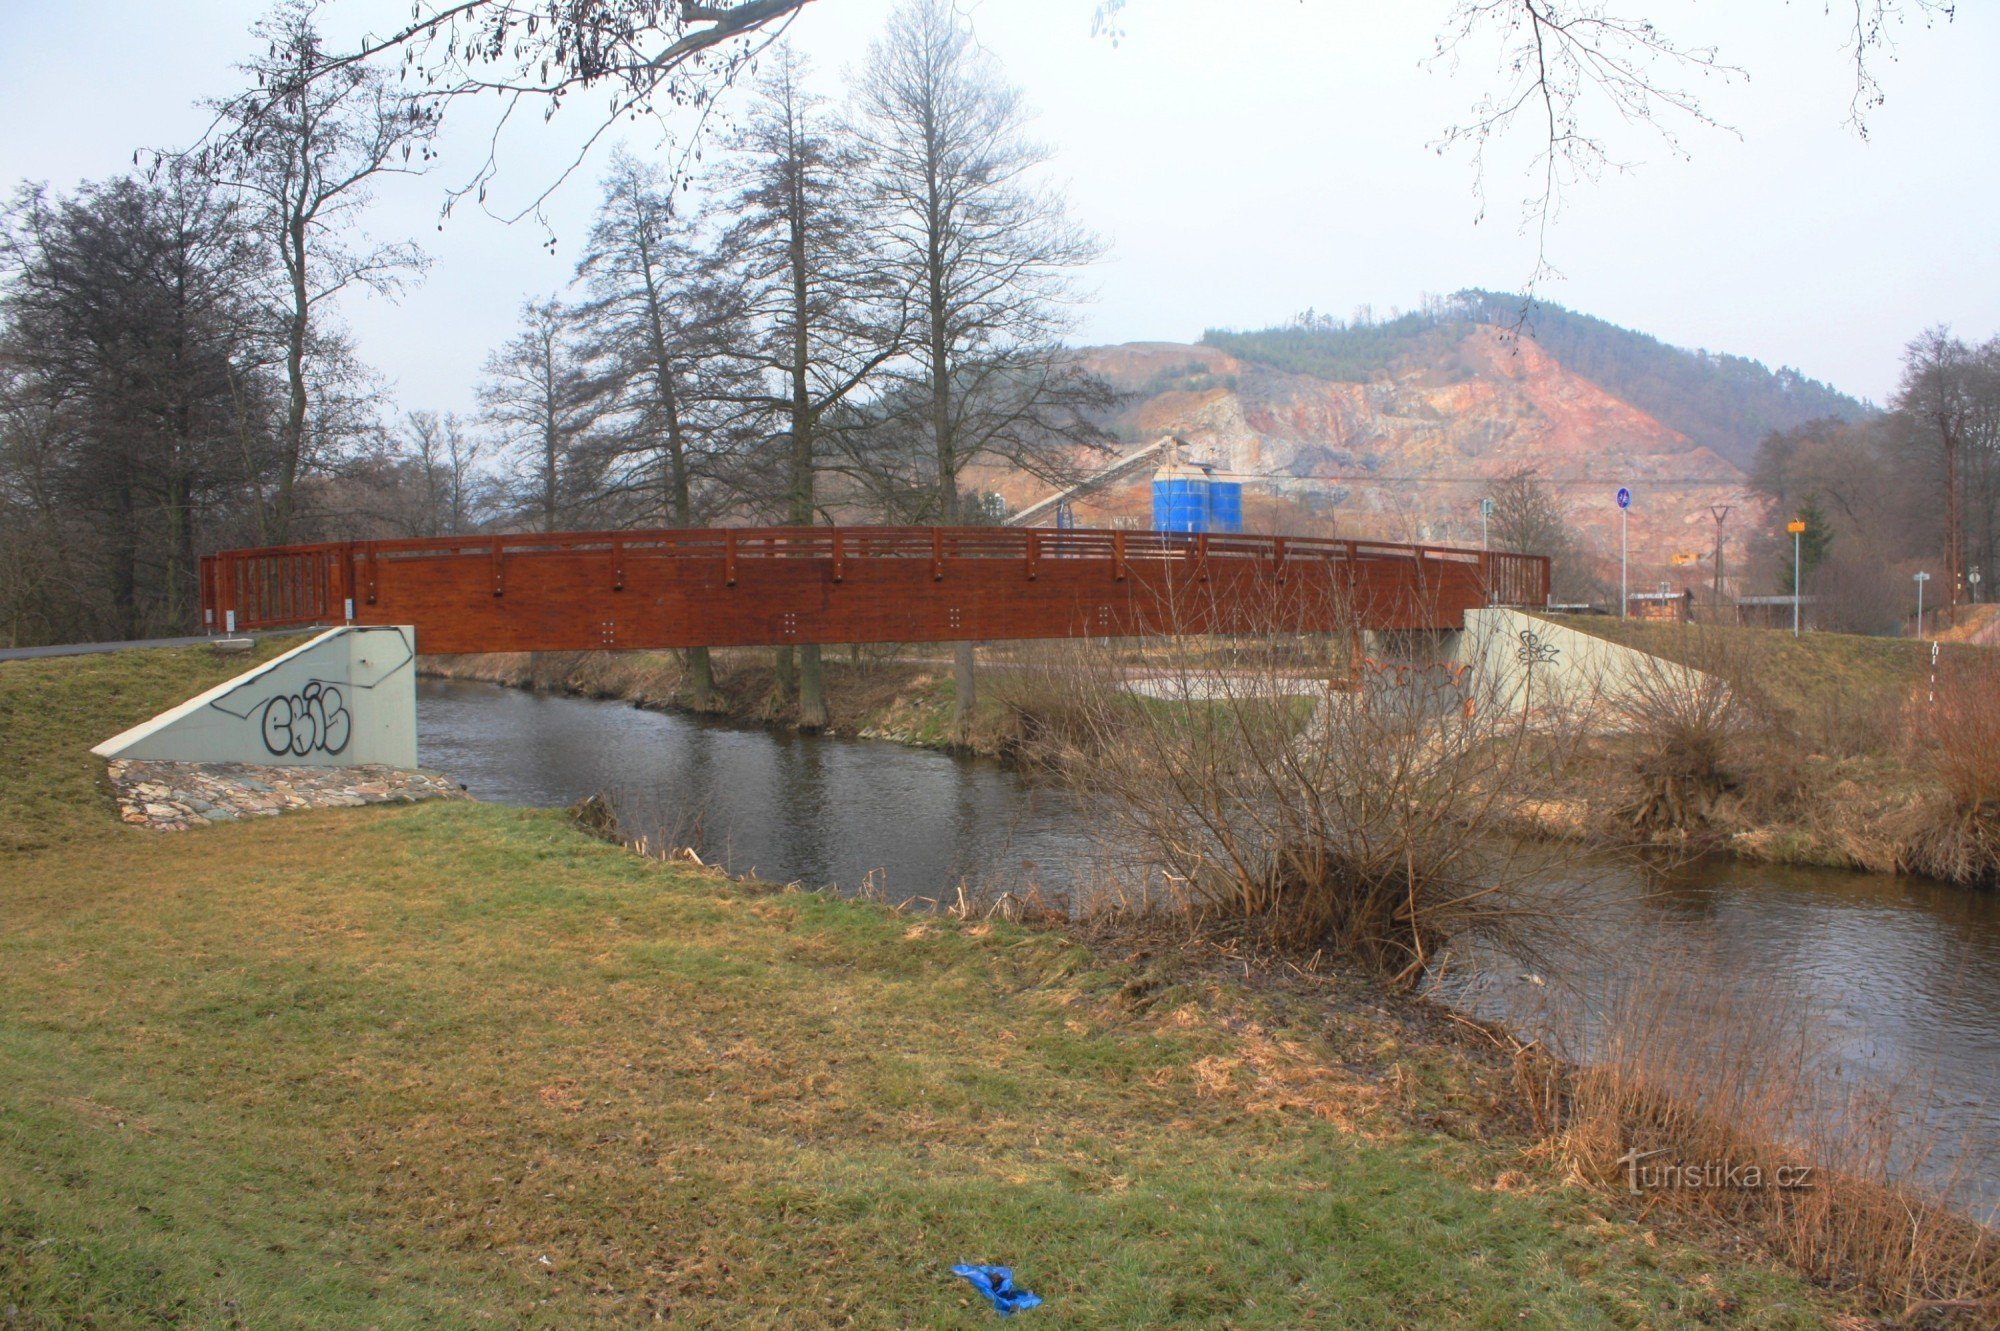 New wooden bridge over the river Svratka